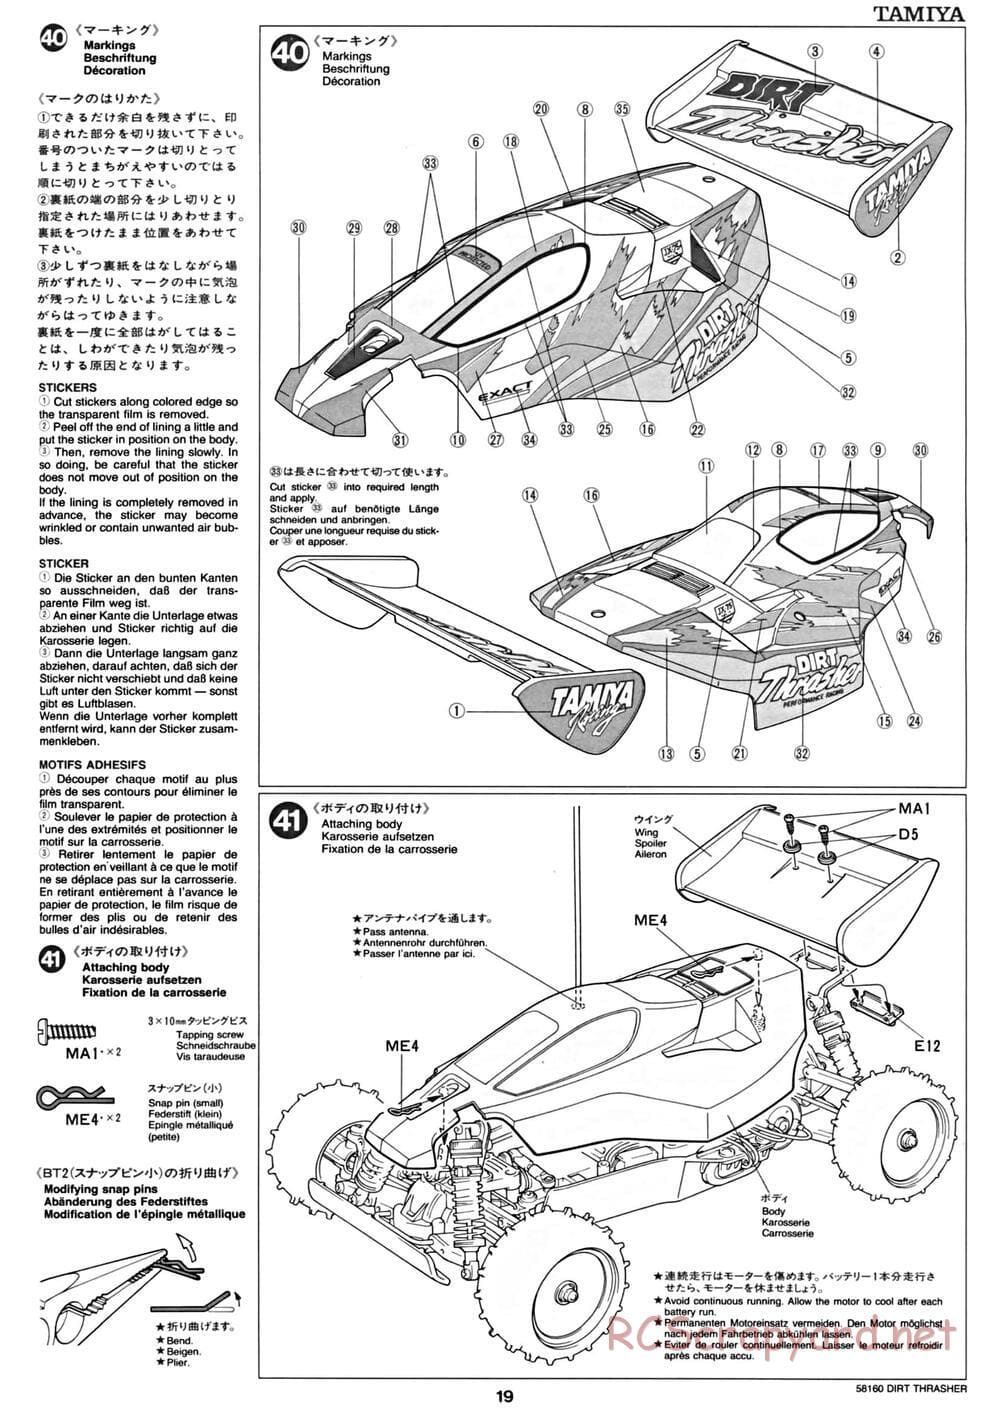 Tamiya - Dirt Thrasher Chassis - Manual - Page 19